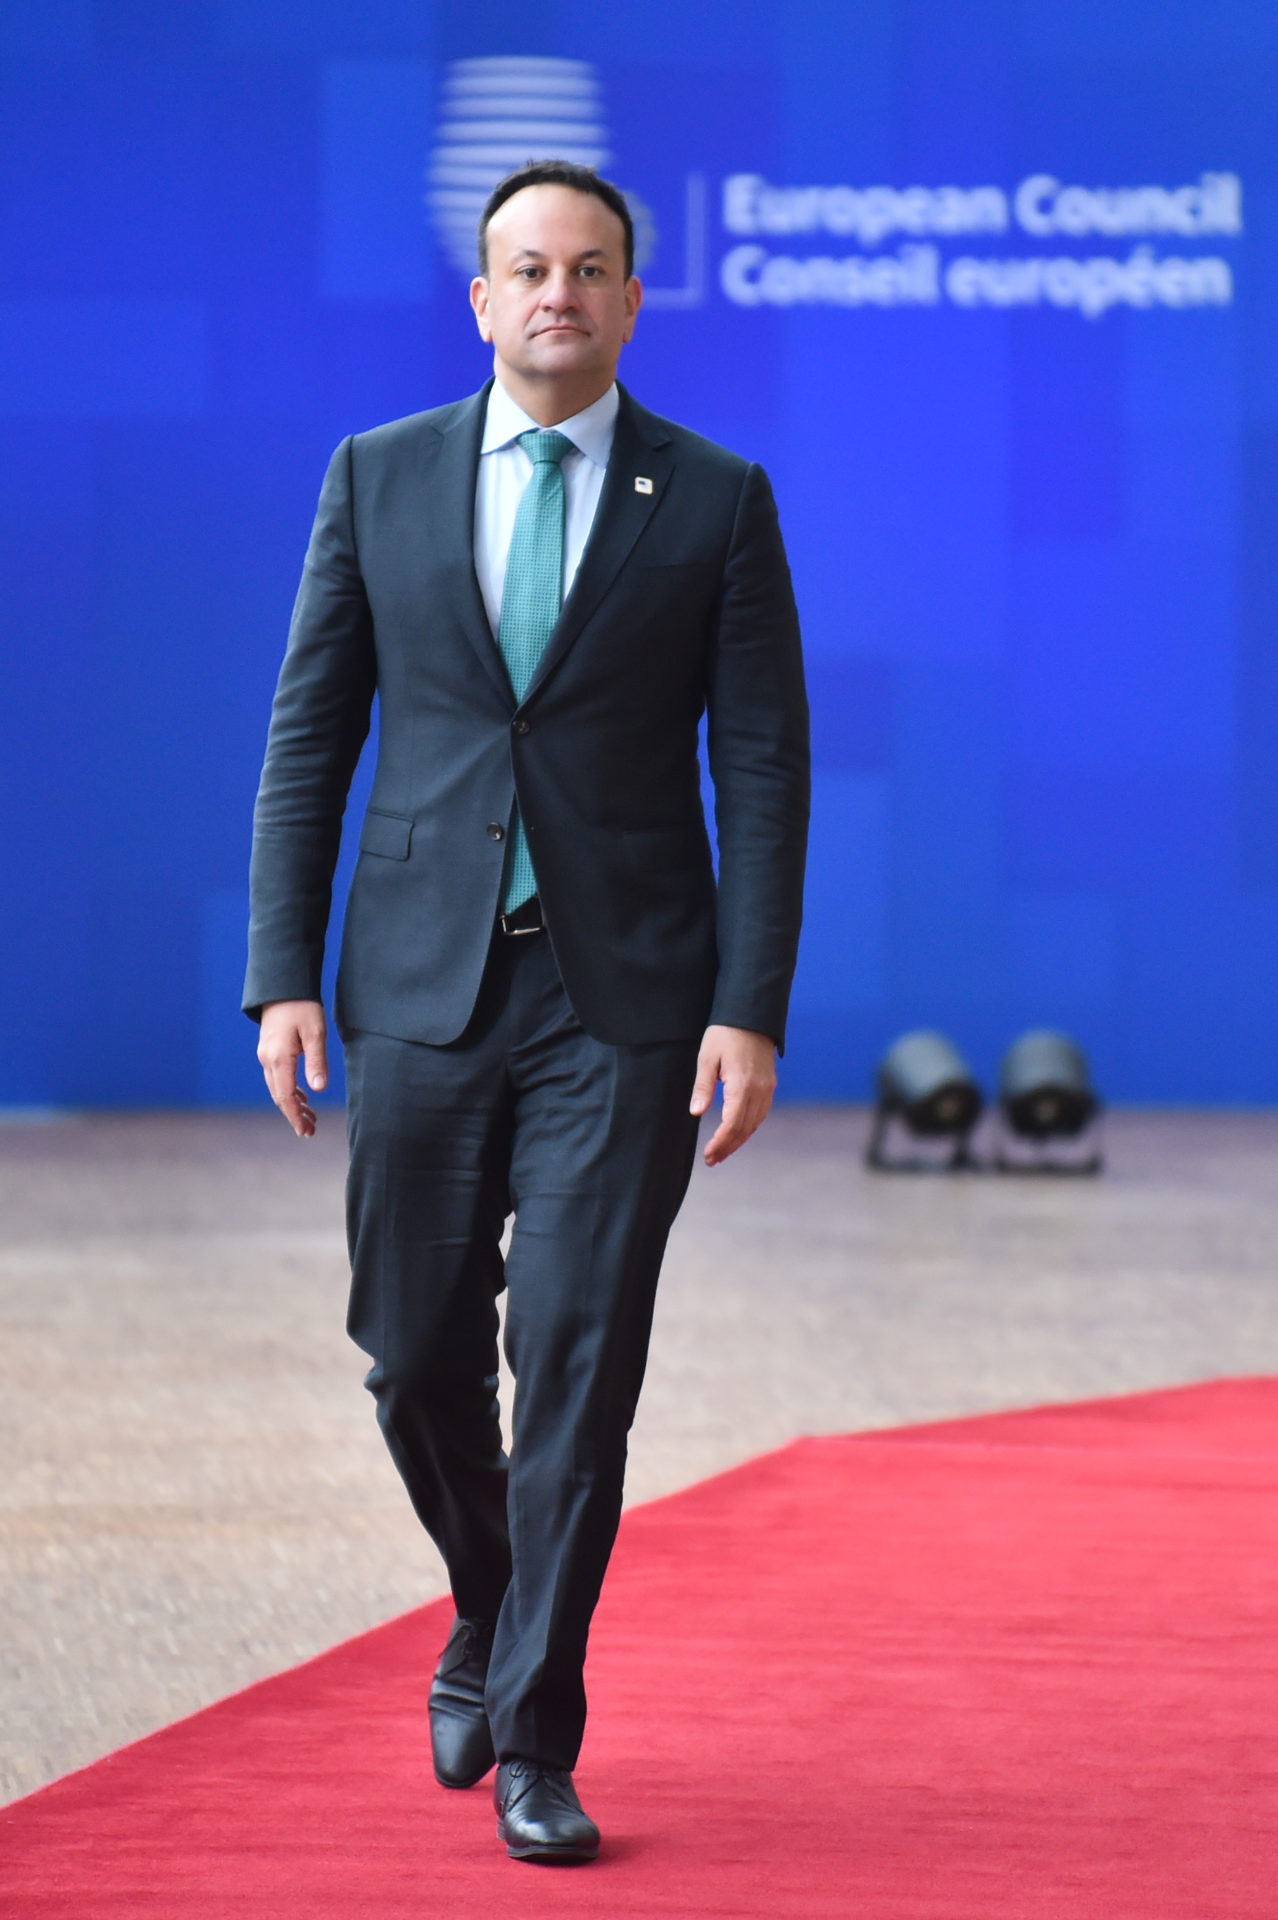 Leo Varadkar arrives at the EU Leaders’ Summit in Brussels